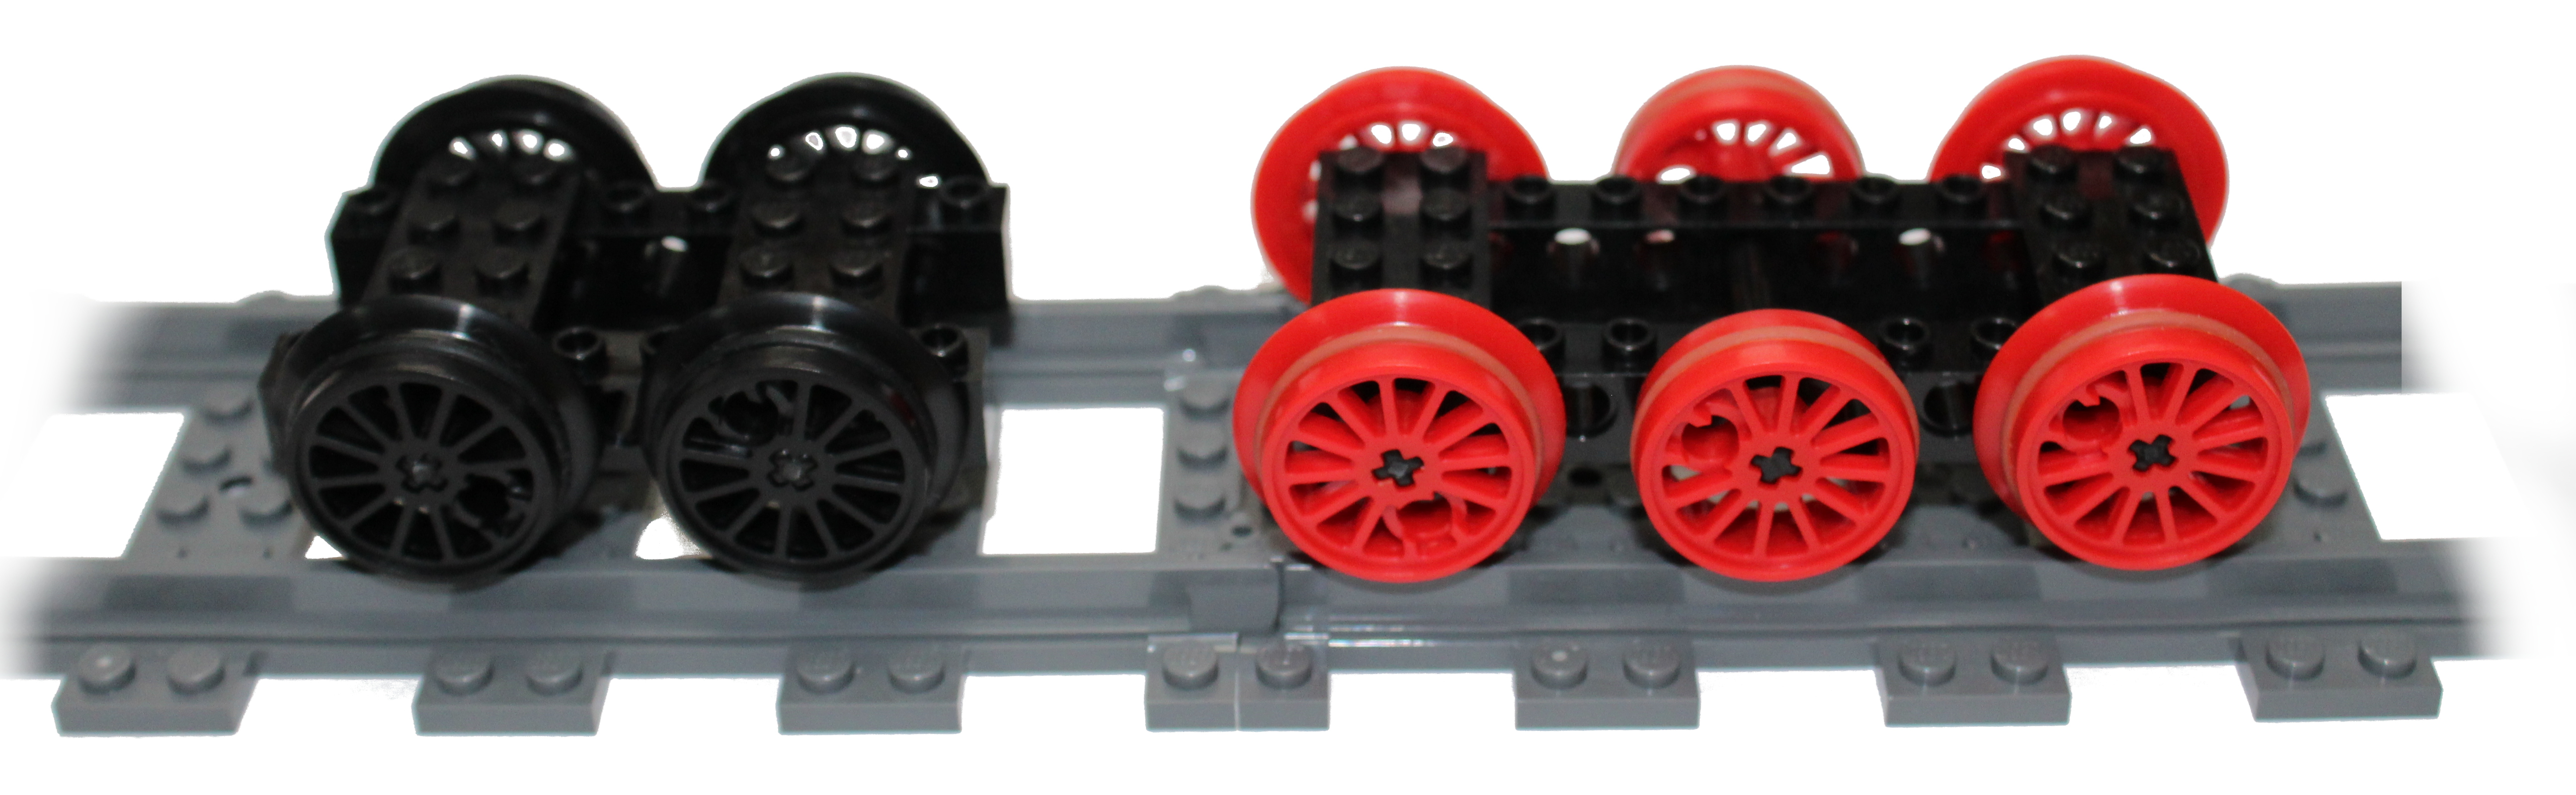 LEGO Railway 2 Axles Light Gray